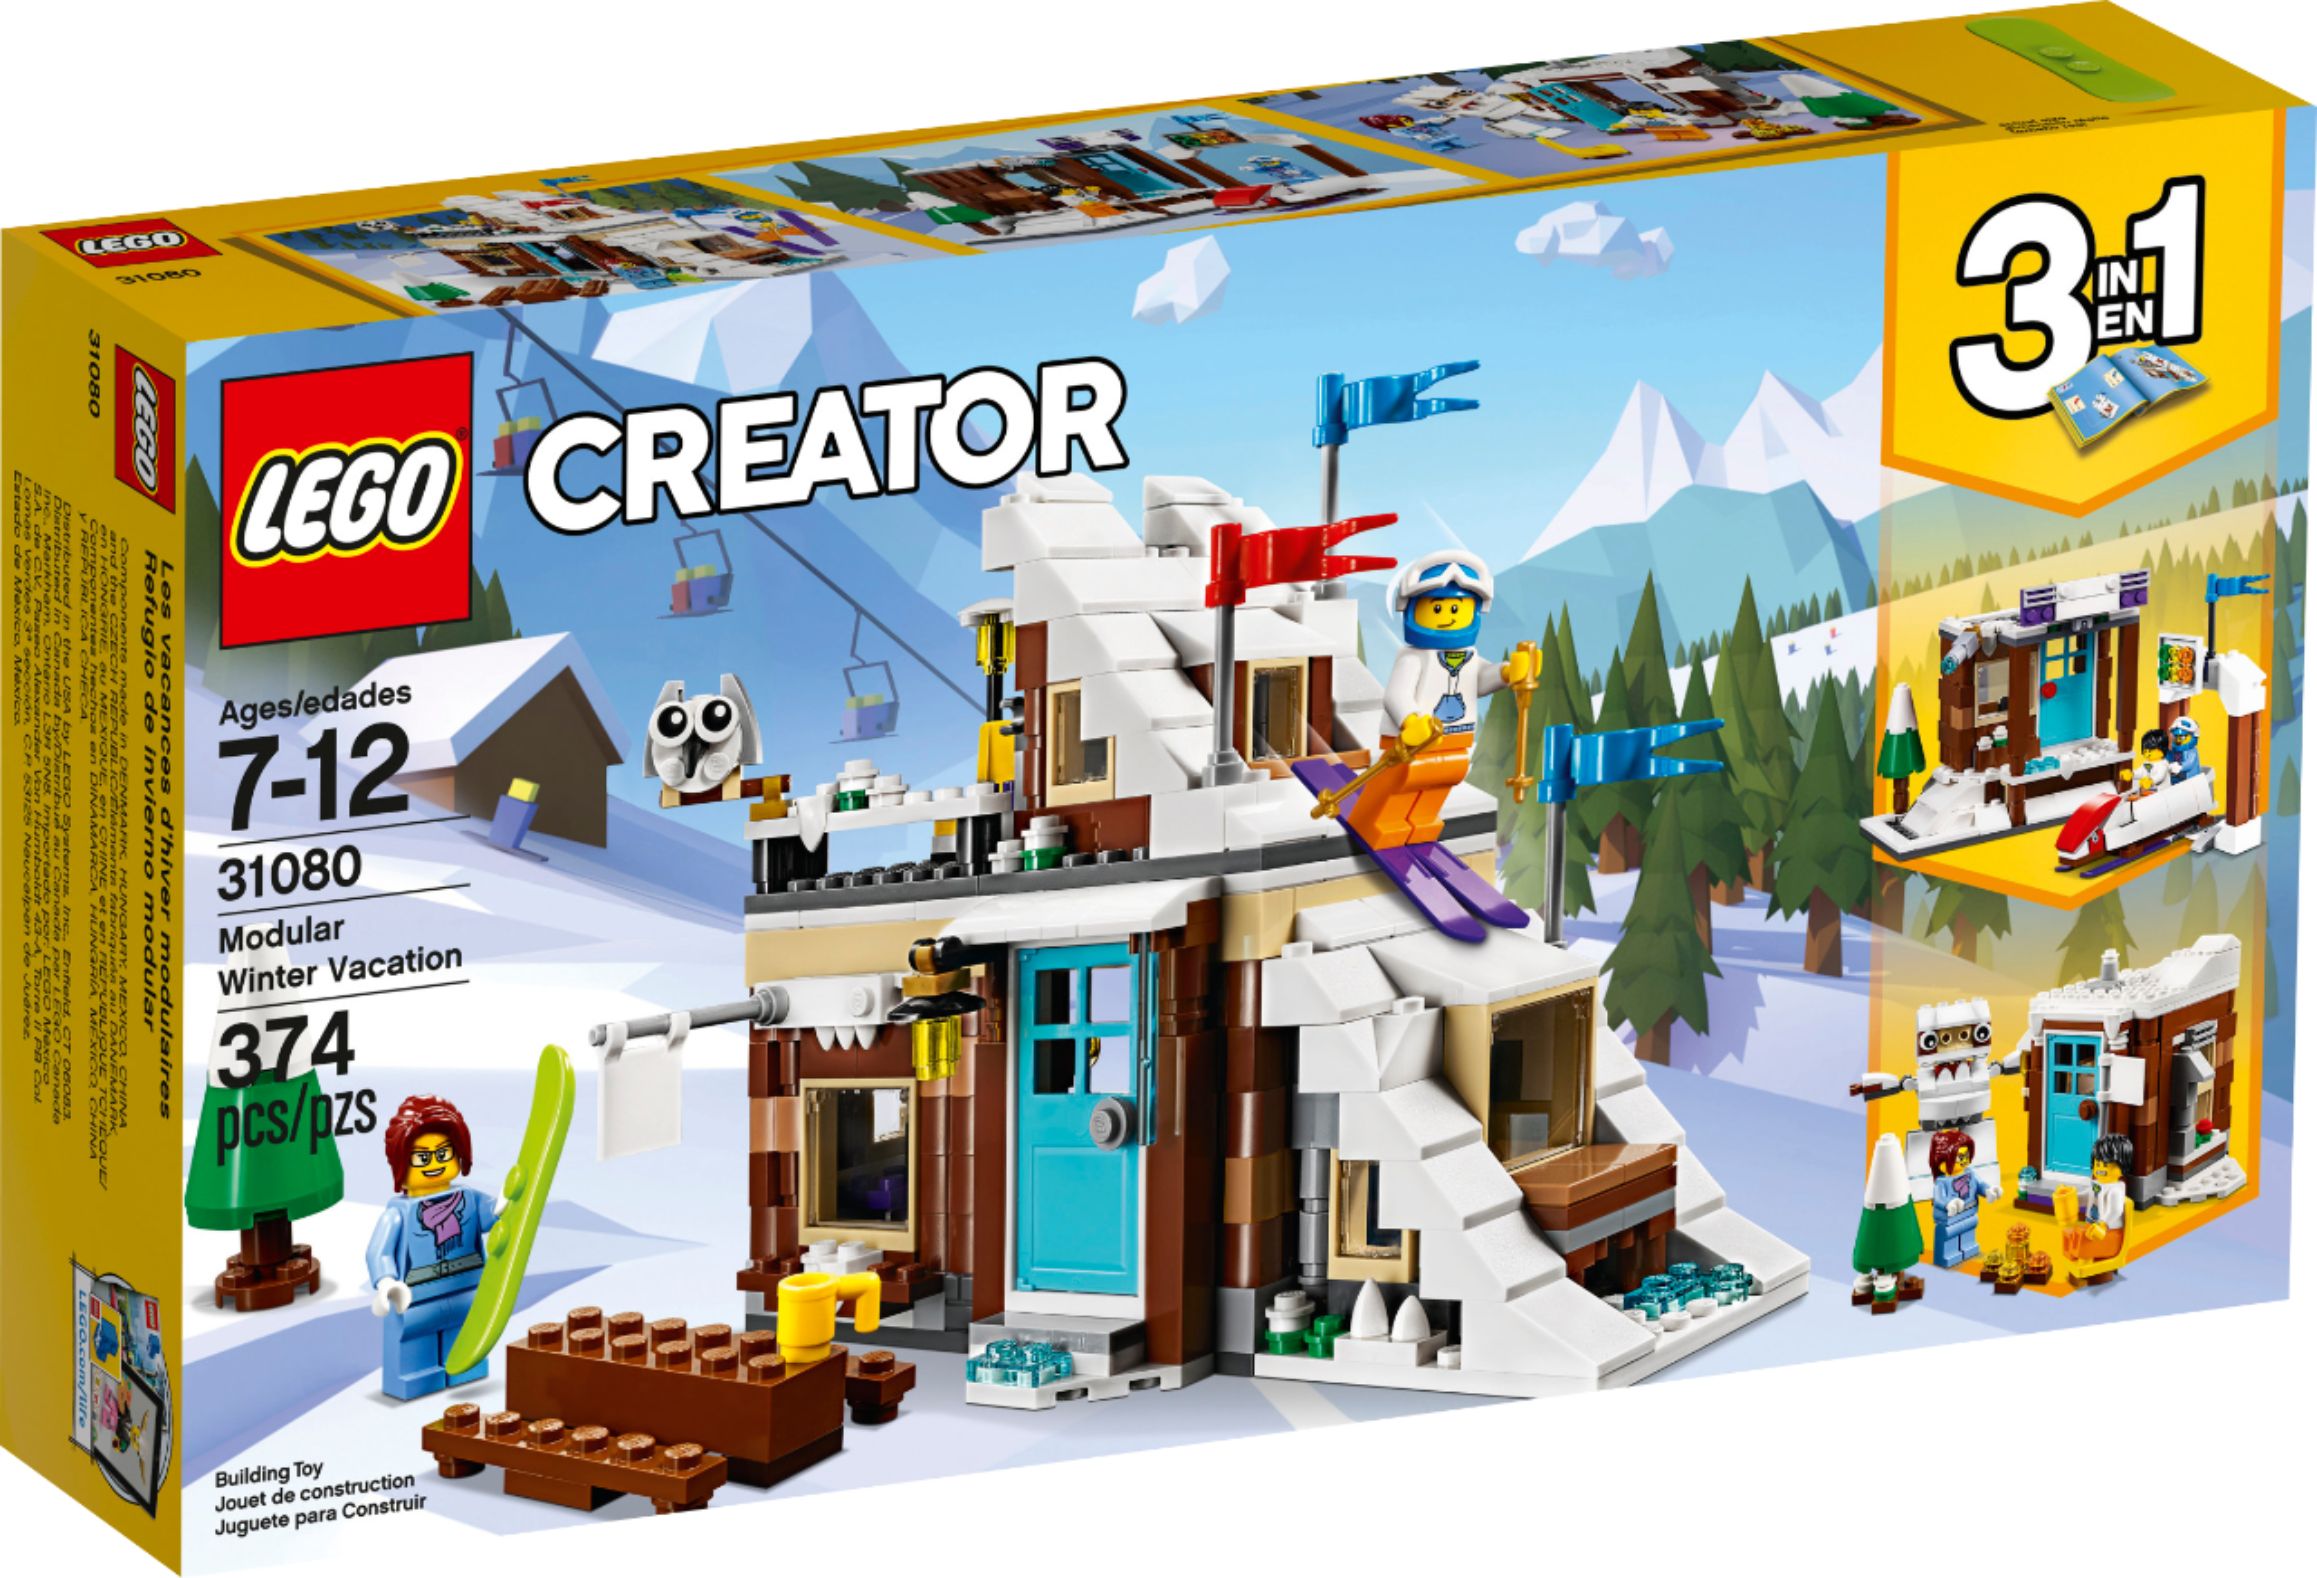 Best Buy: LEGO Creator 3-in-1 Modular Winter Vacation 31080 6213384